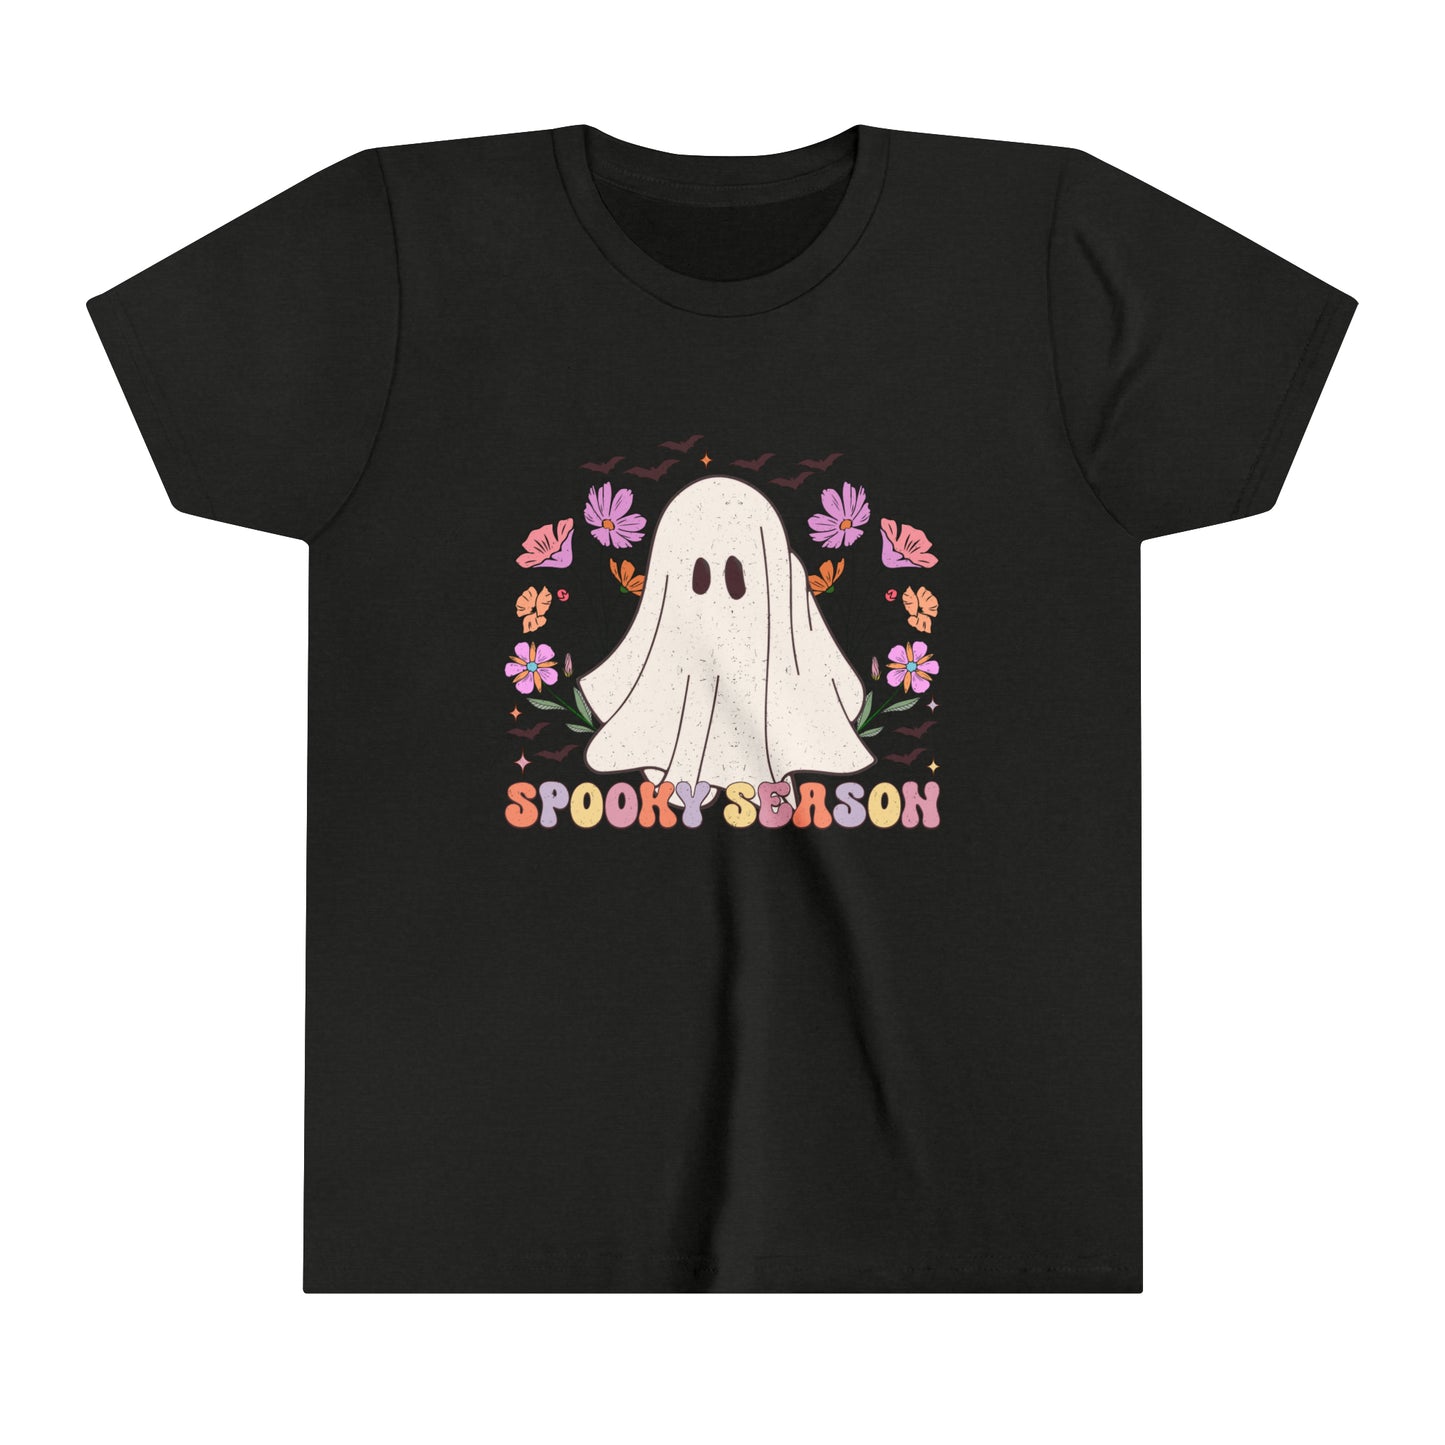 Spooky Season Ghost Girl's Youth Short Sleeve Tee